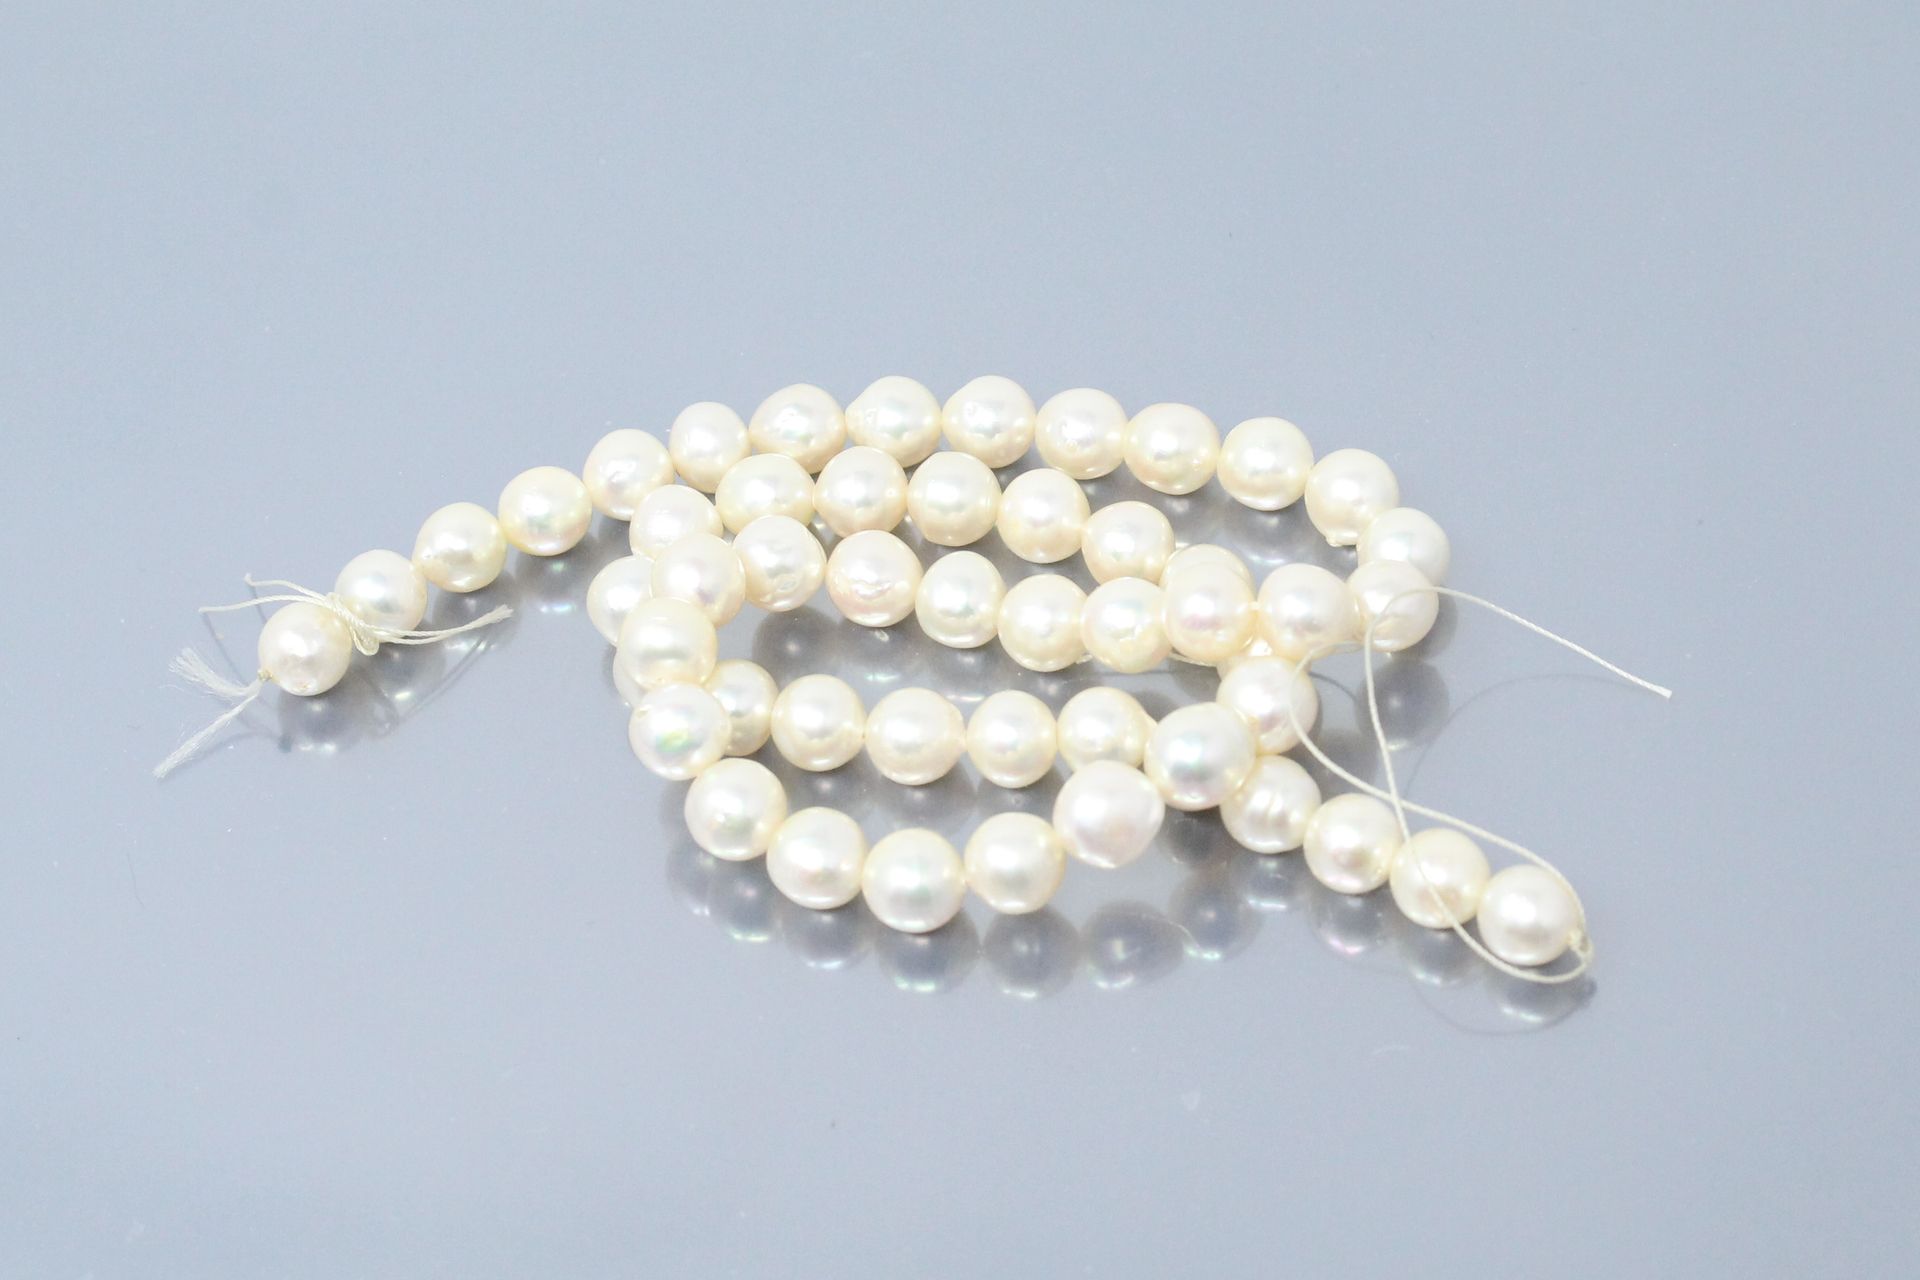 Null 巴洛克风格的吊坠 养殖珍珠在钢丝上。无扣子。

直径：8至9毫米之间。